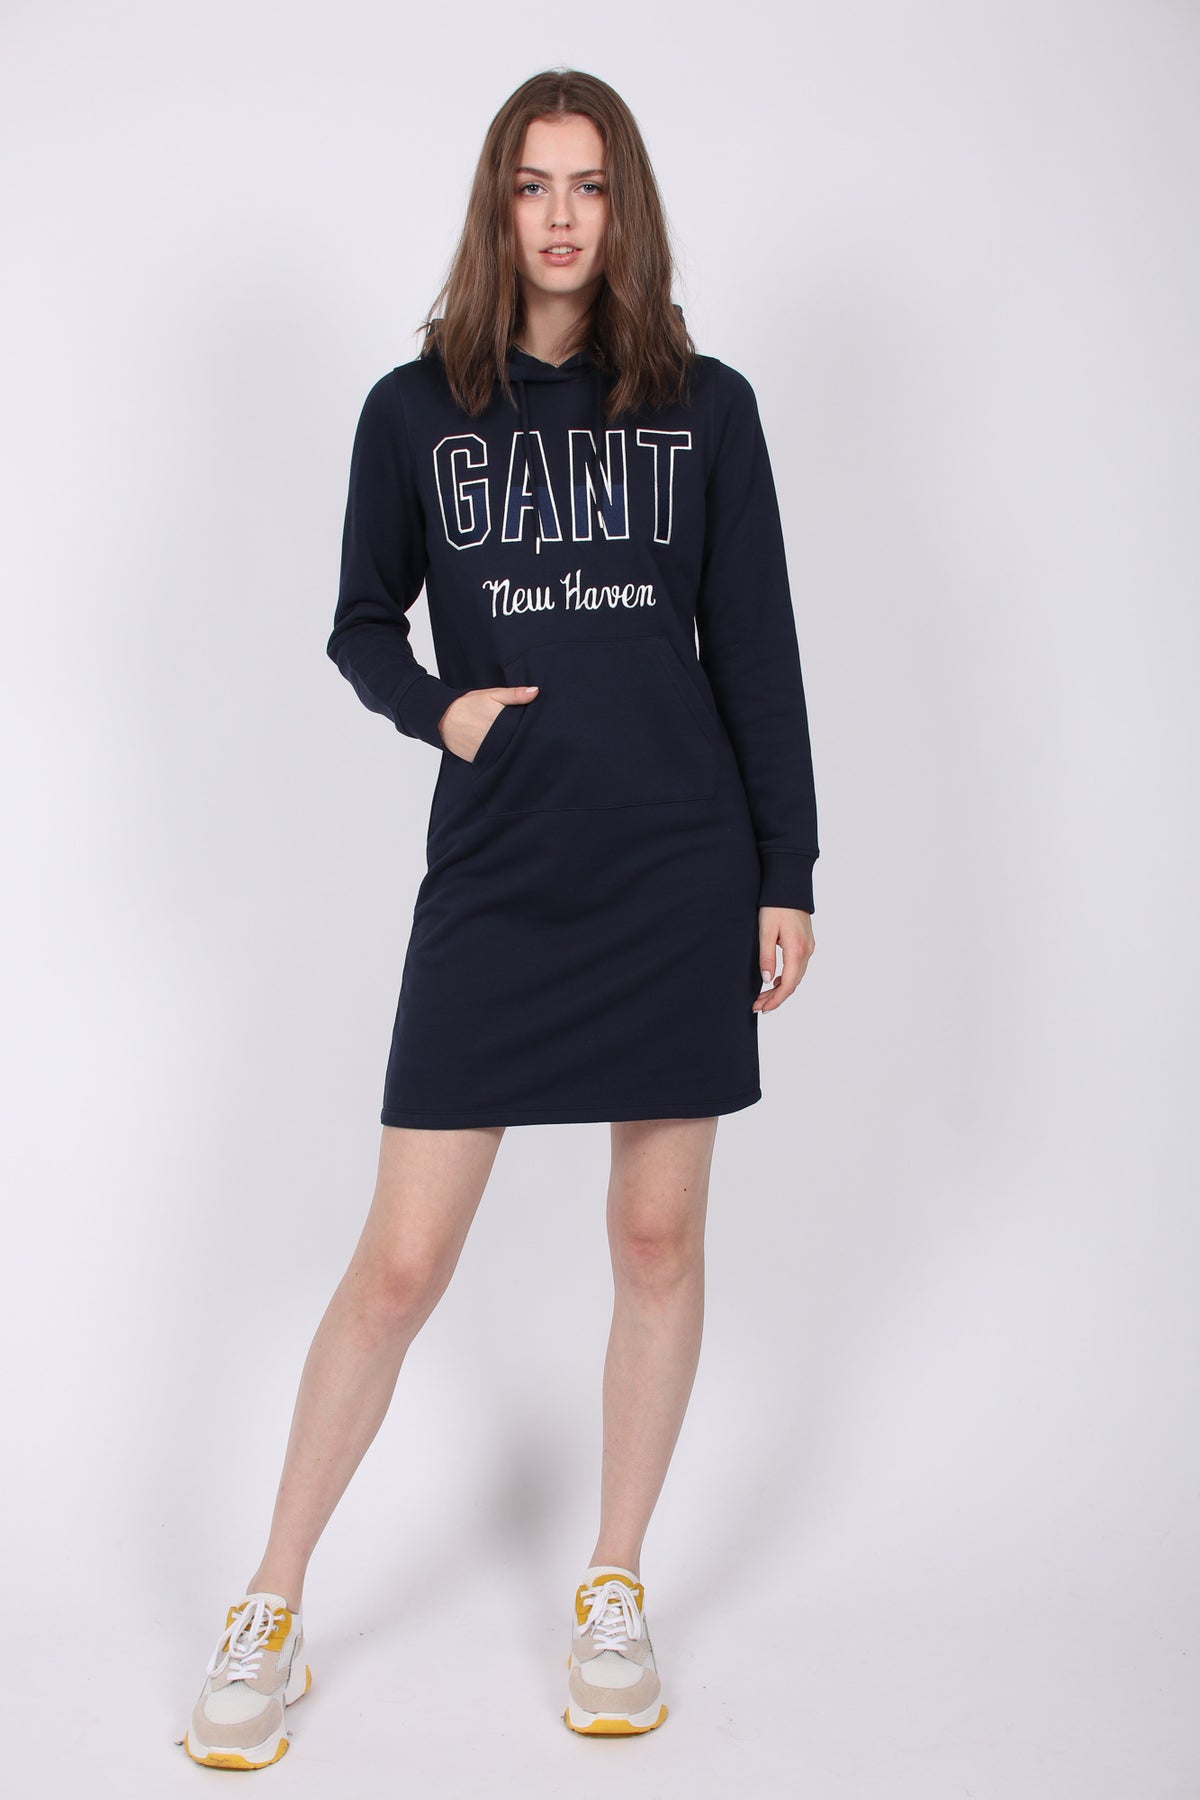 Gant N.H Hoodie dress - Evening Blue - GANT - Kjoler - VILLOID.no